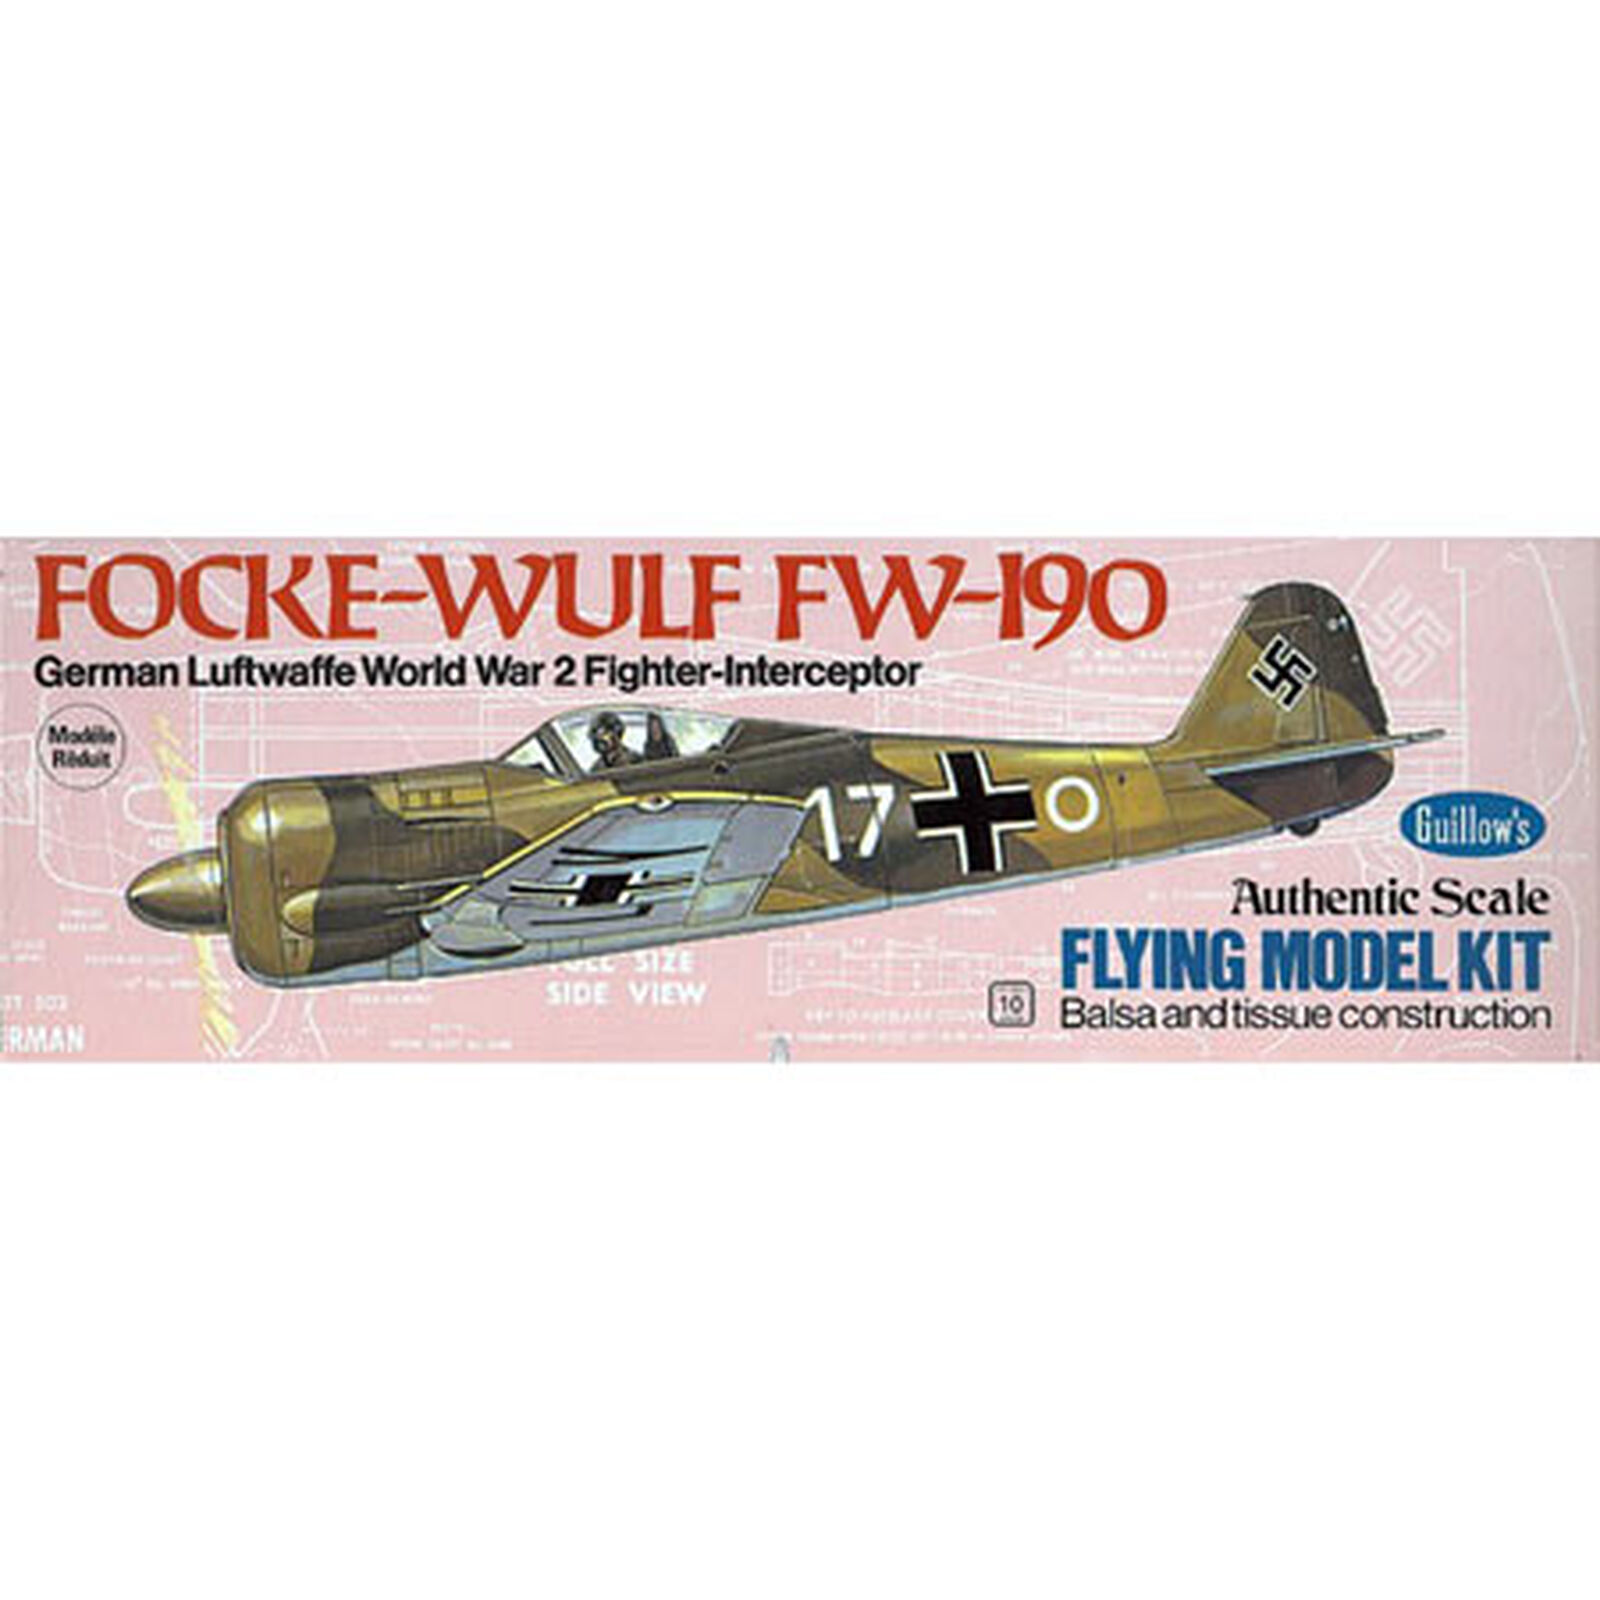 Focke-Wulf FW-190 Kit, 16.5"